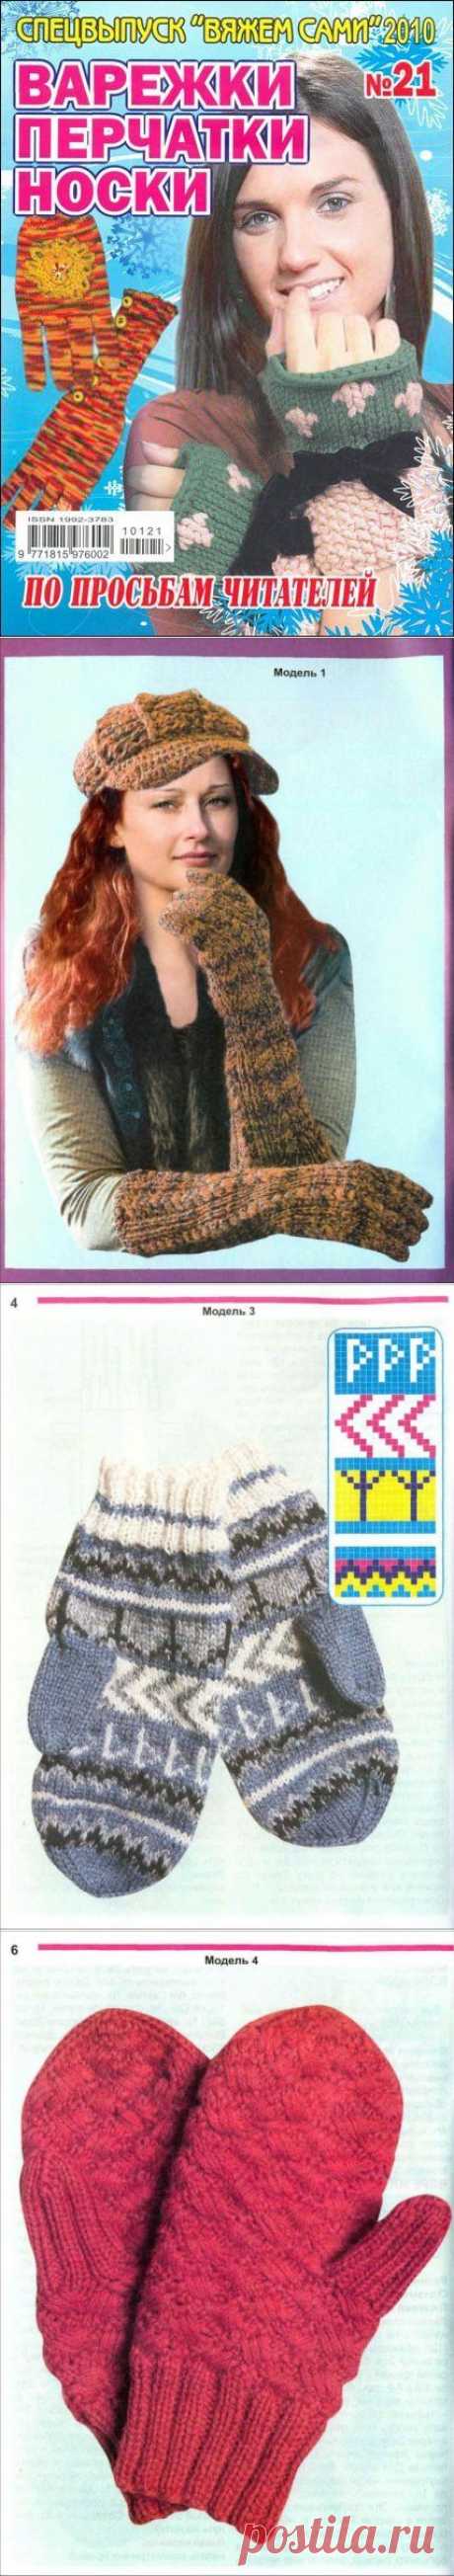 Журнал: Варежки, перчатки, носки (Спецвыпуск - Вяжем сами)